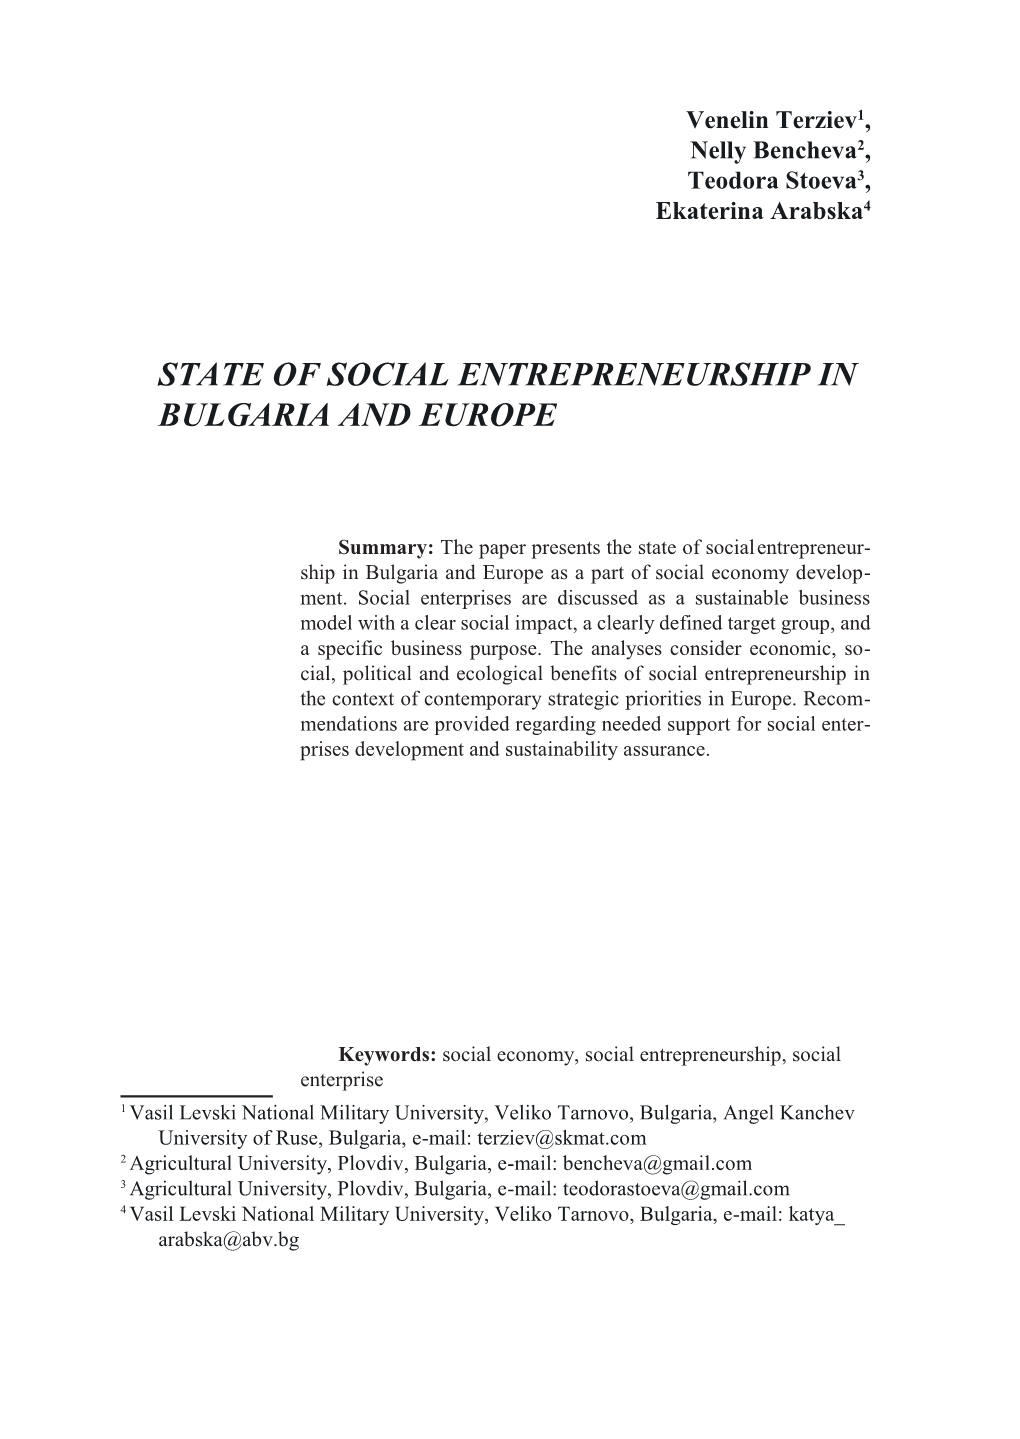 State of Social Entrepreneurship in Bulgaria and Europe